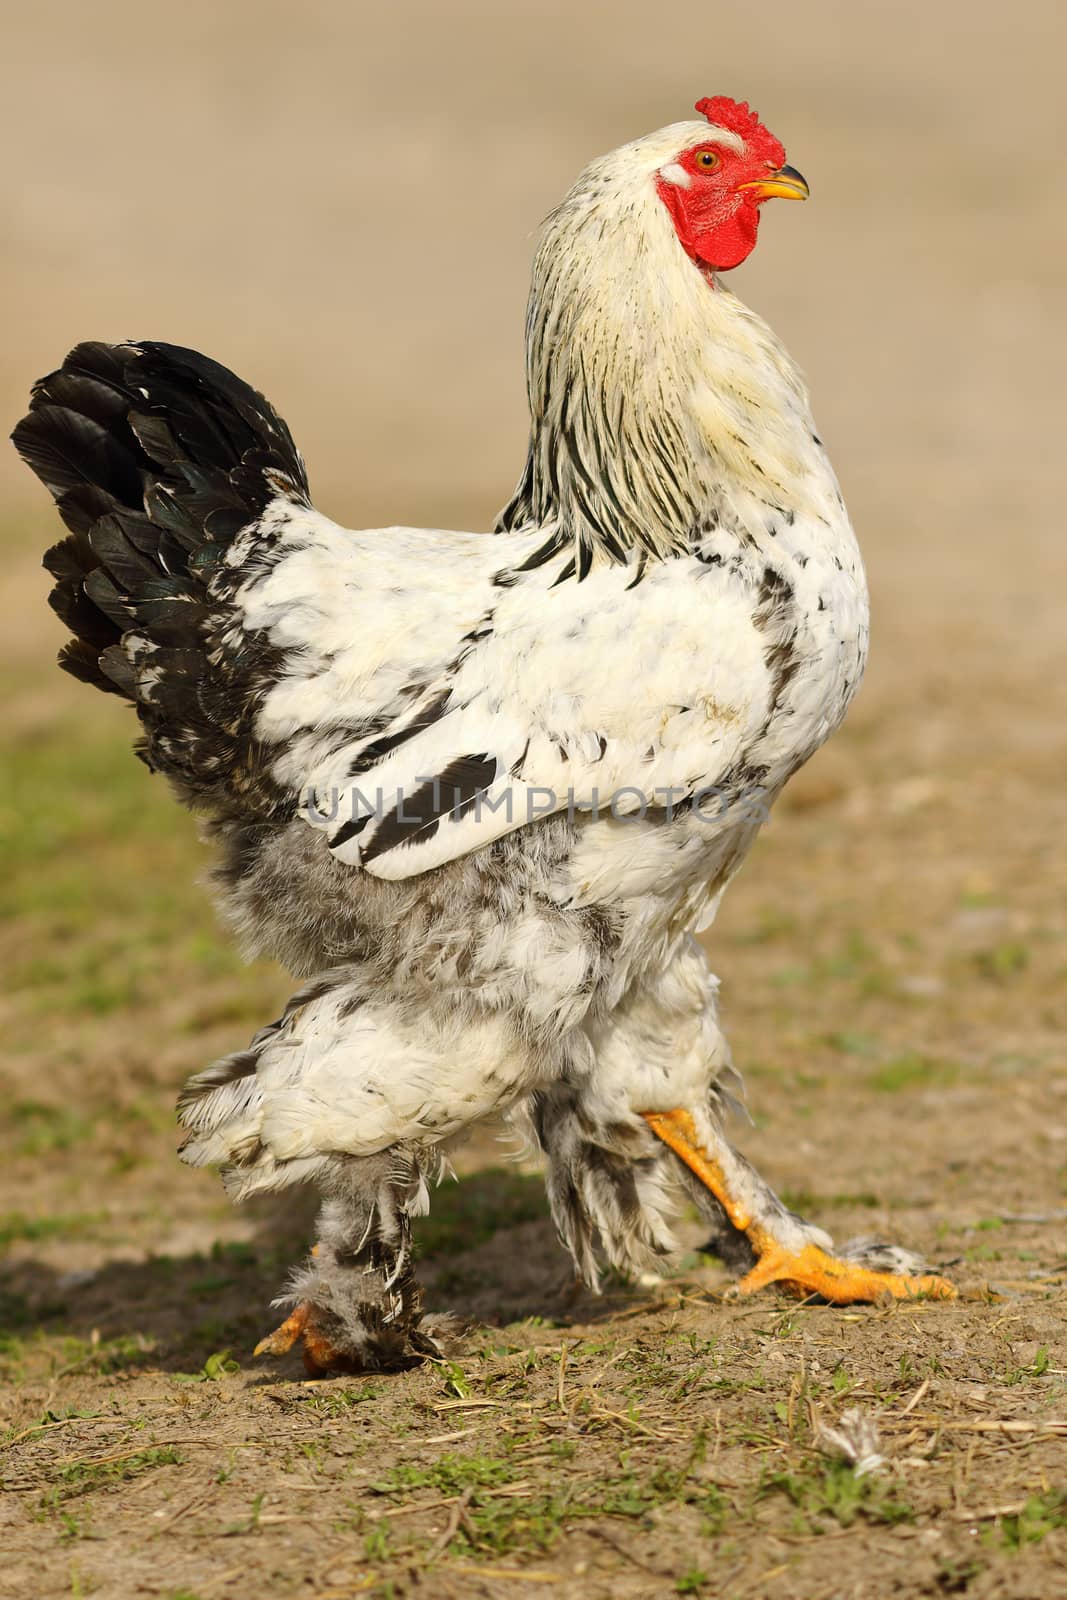 mottled colorful rooster walking proud in farm yard